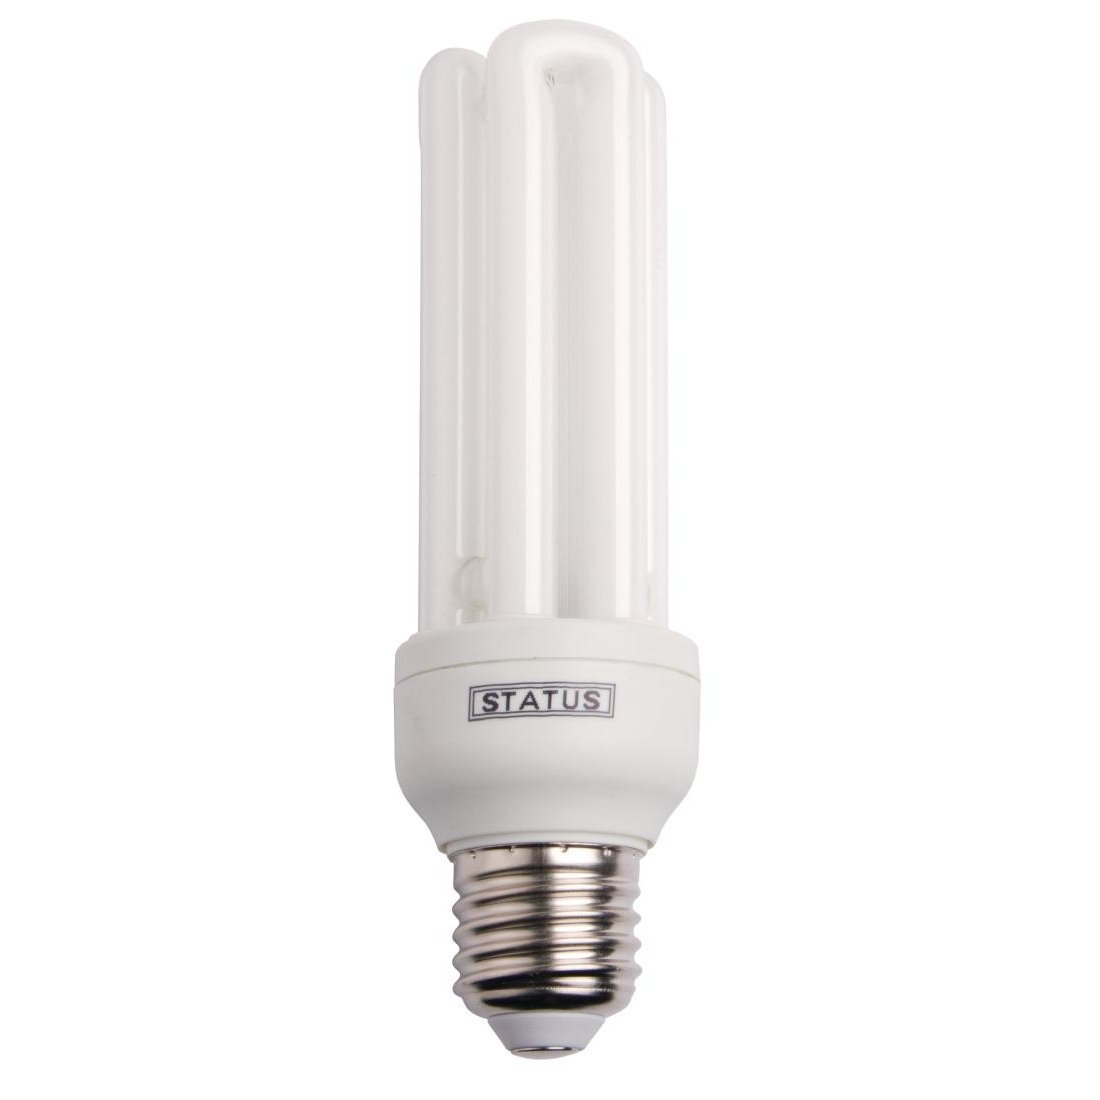 Status CFL Energy Saving Bulb Edison Screw 20W